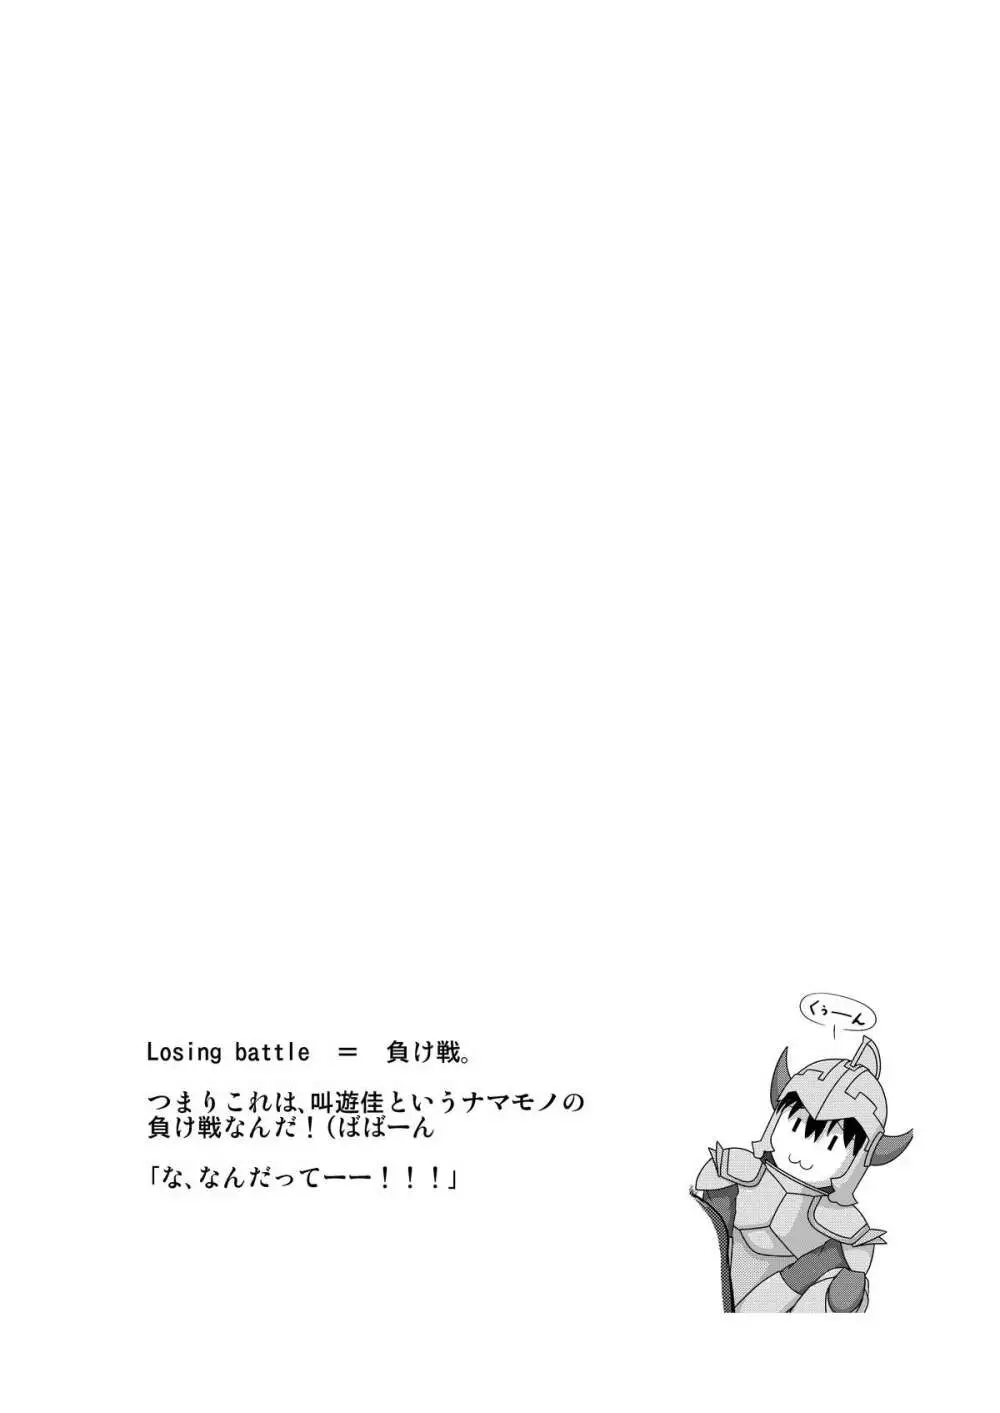 Losing Battle #01～03セット DL版 22ページ